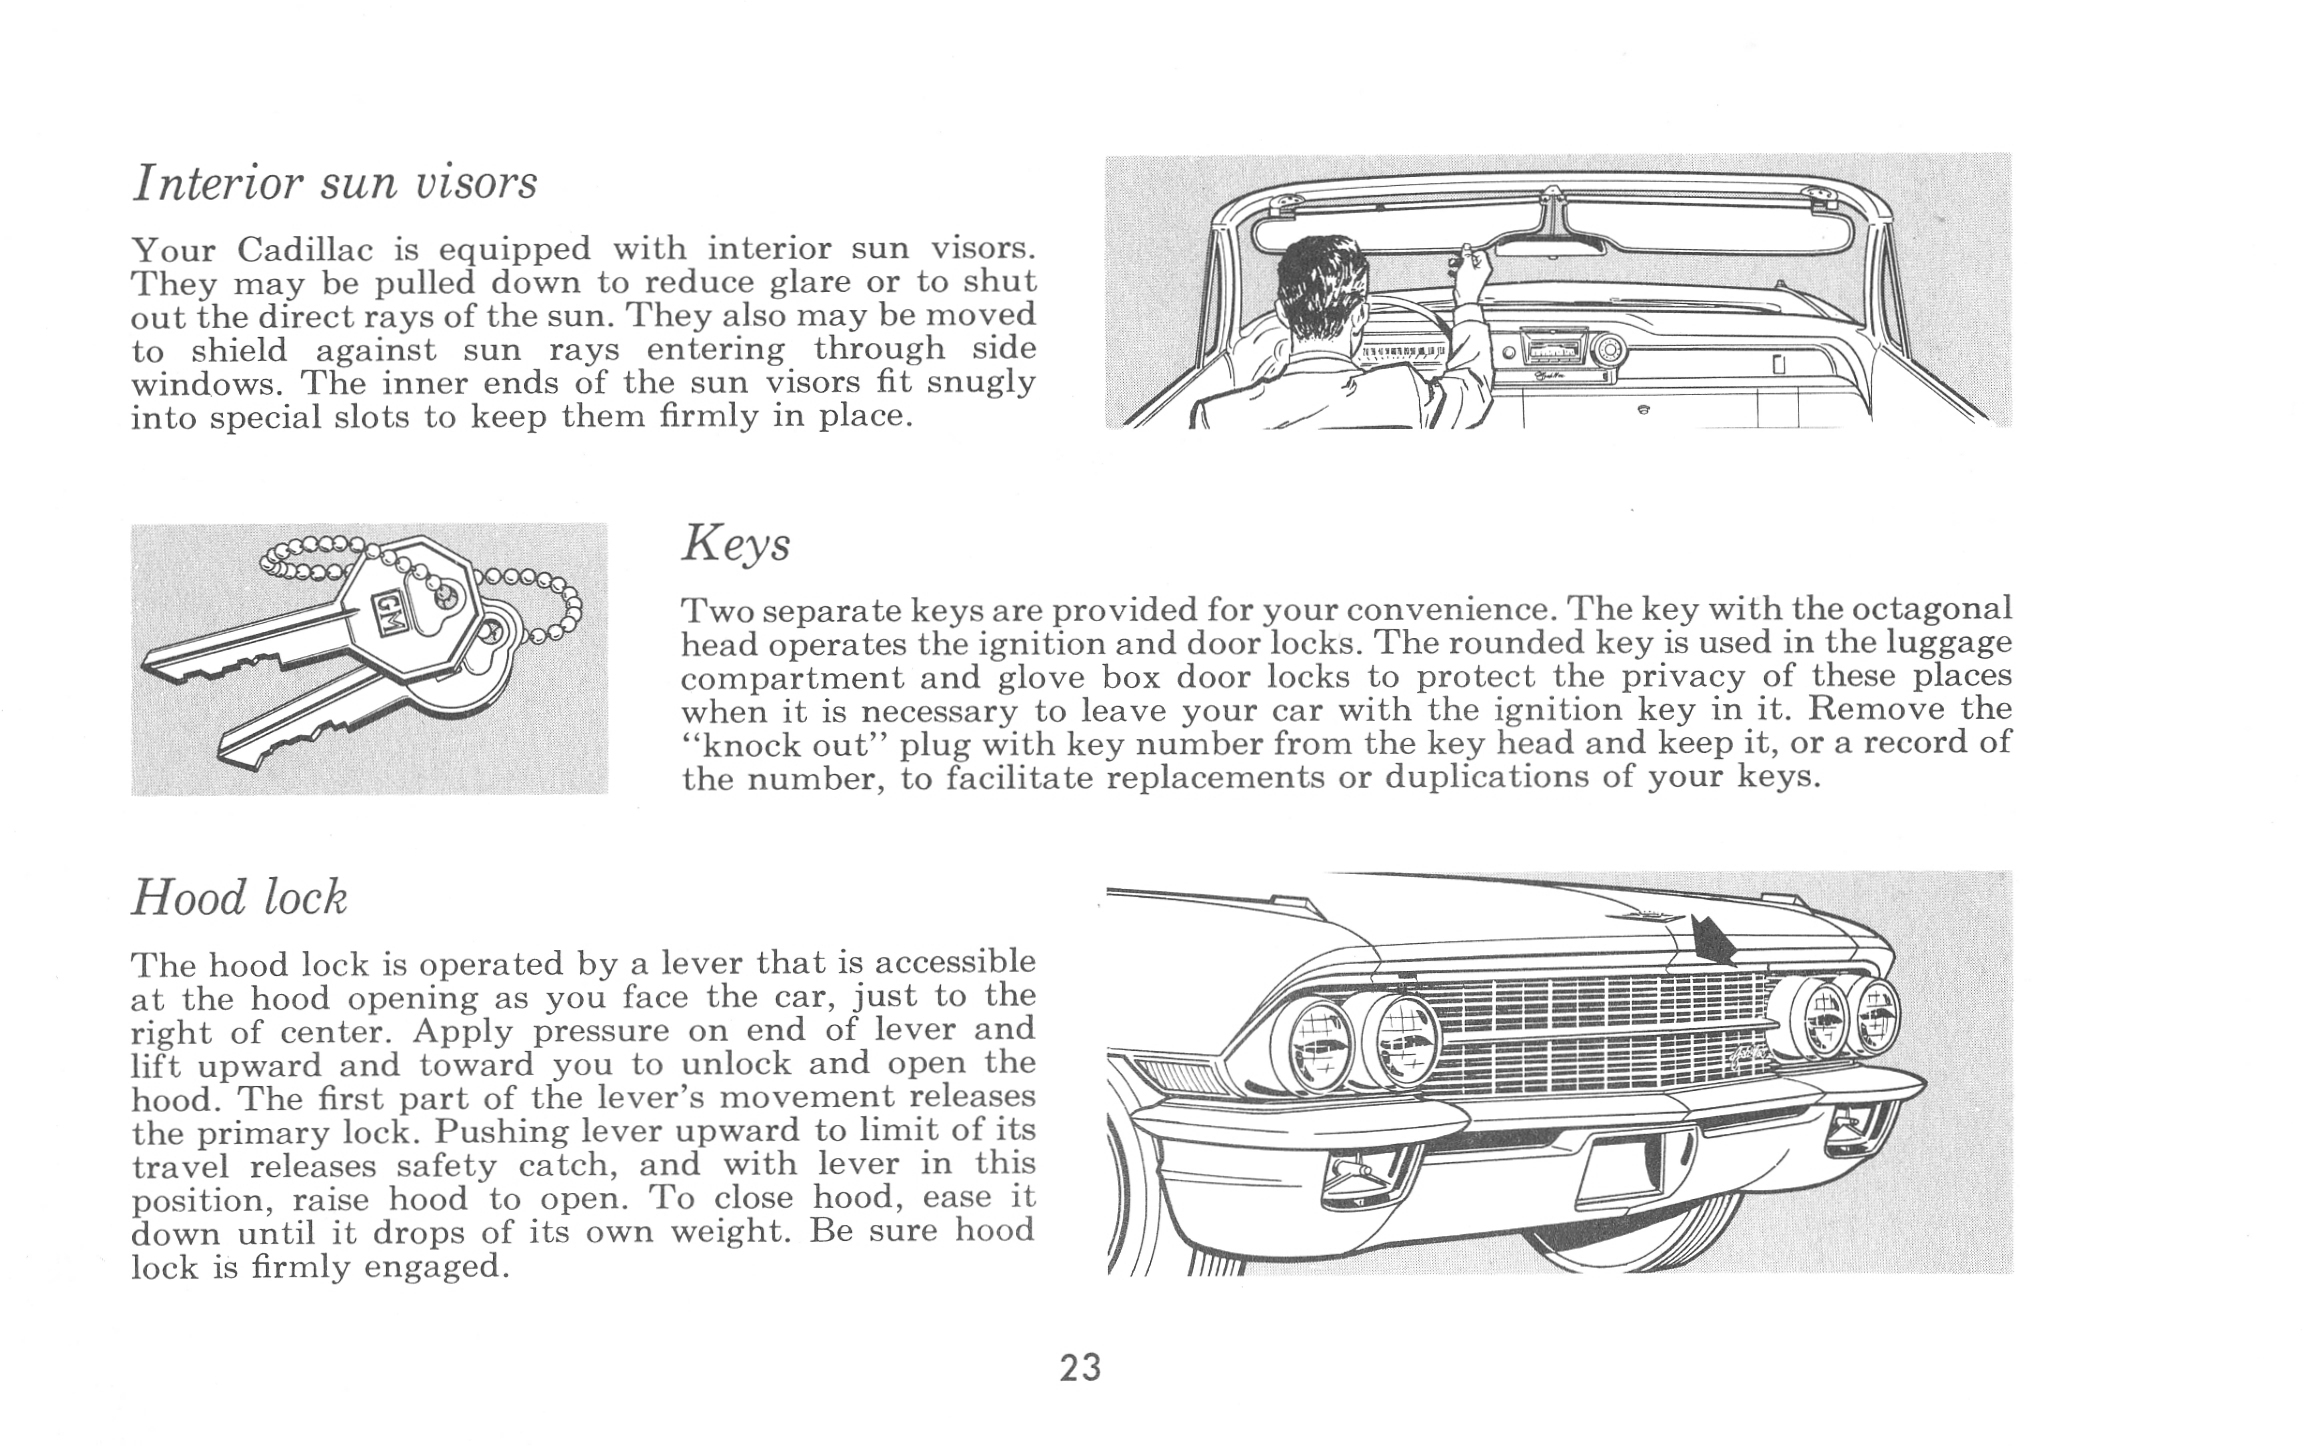 n_1962 Cadillac Owner's Manual-Page 23.jpg